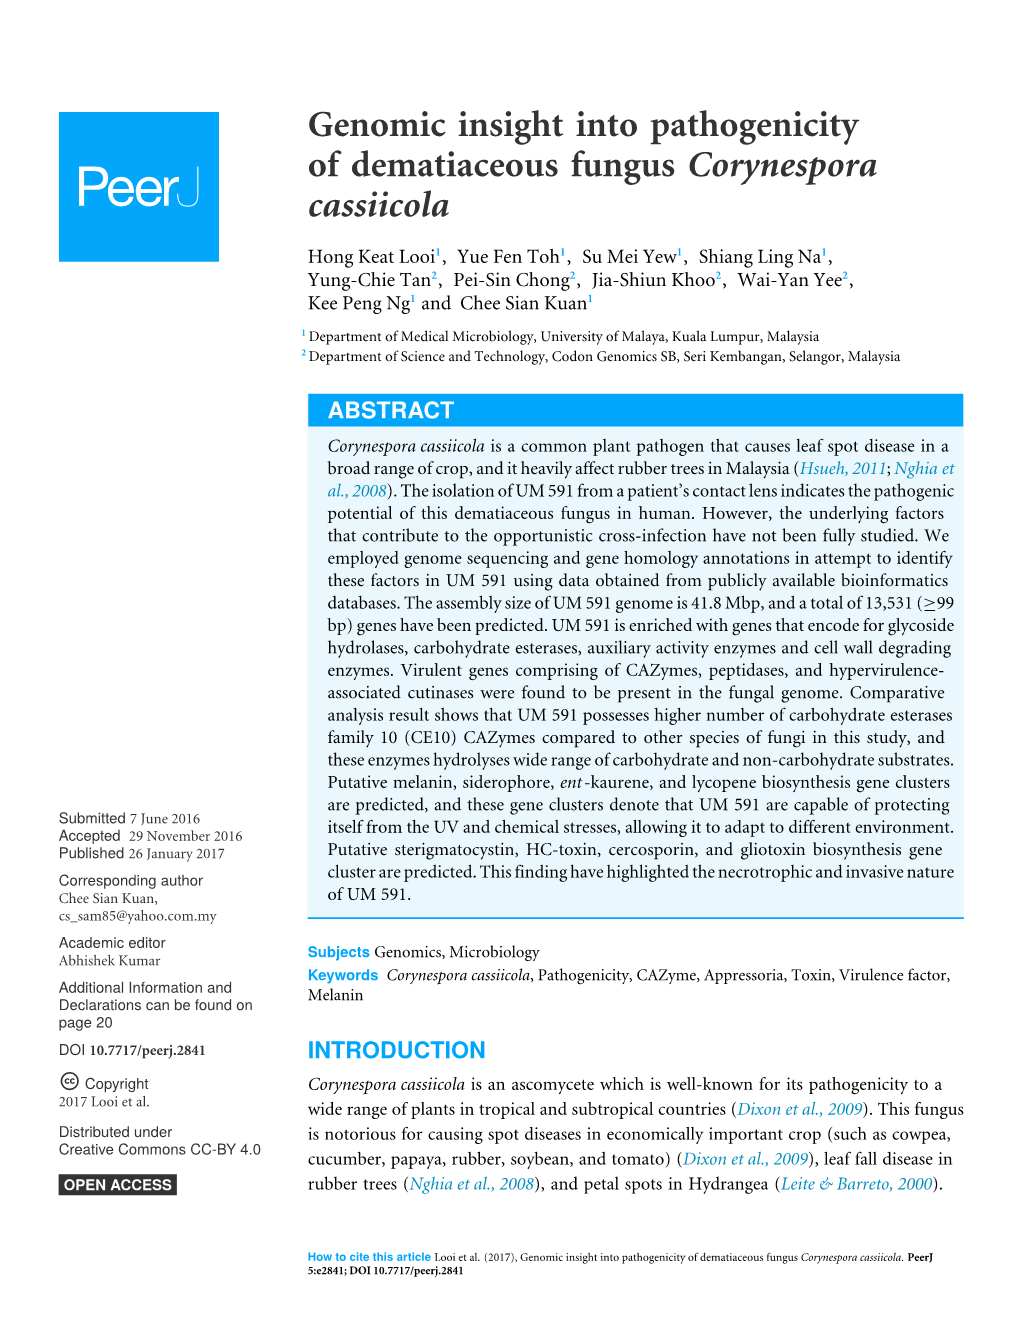 Genomic Insight Into Pathogenicity of Dematiaceous Fungus Corynespora Cassiicola